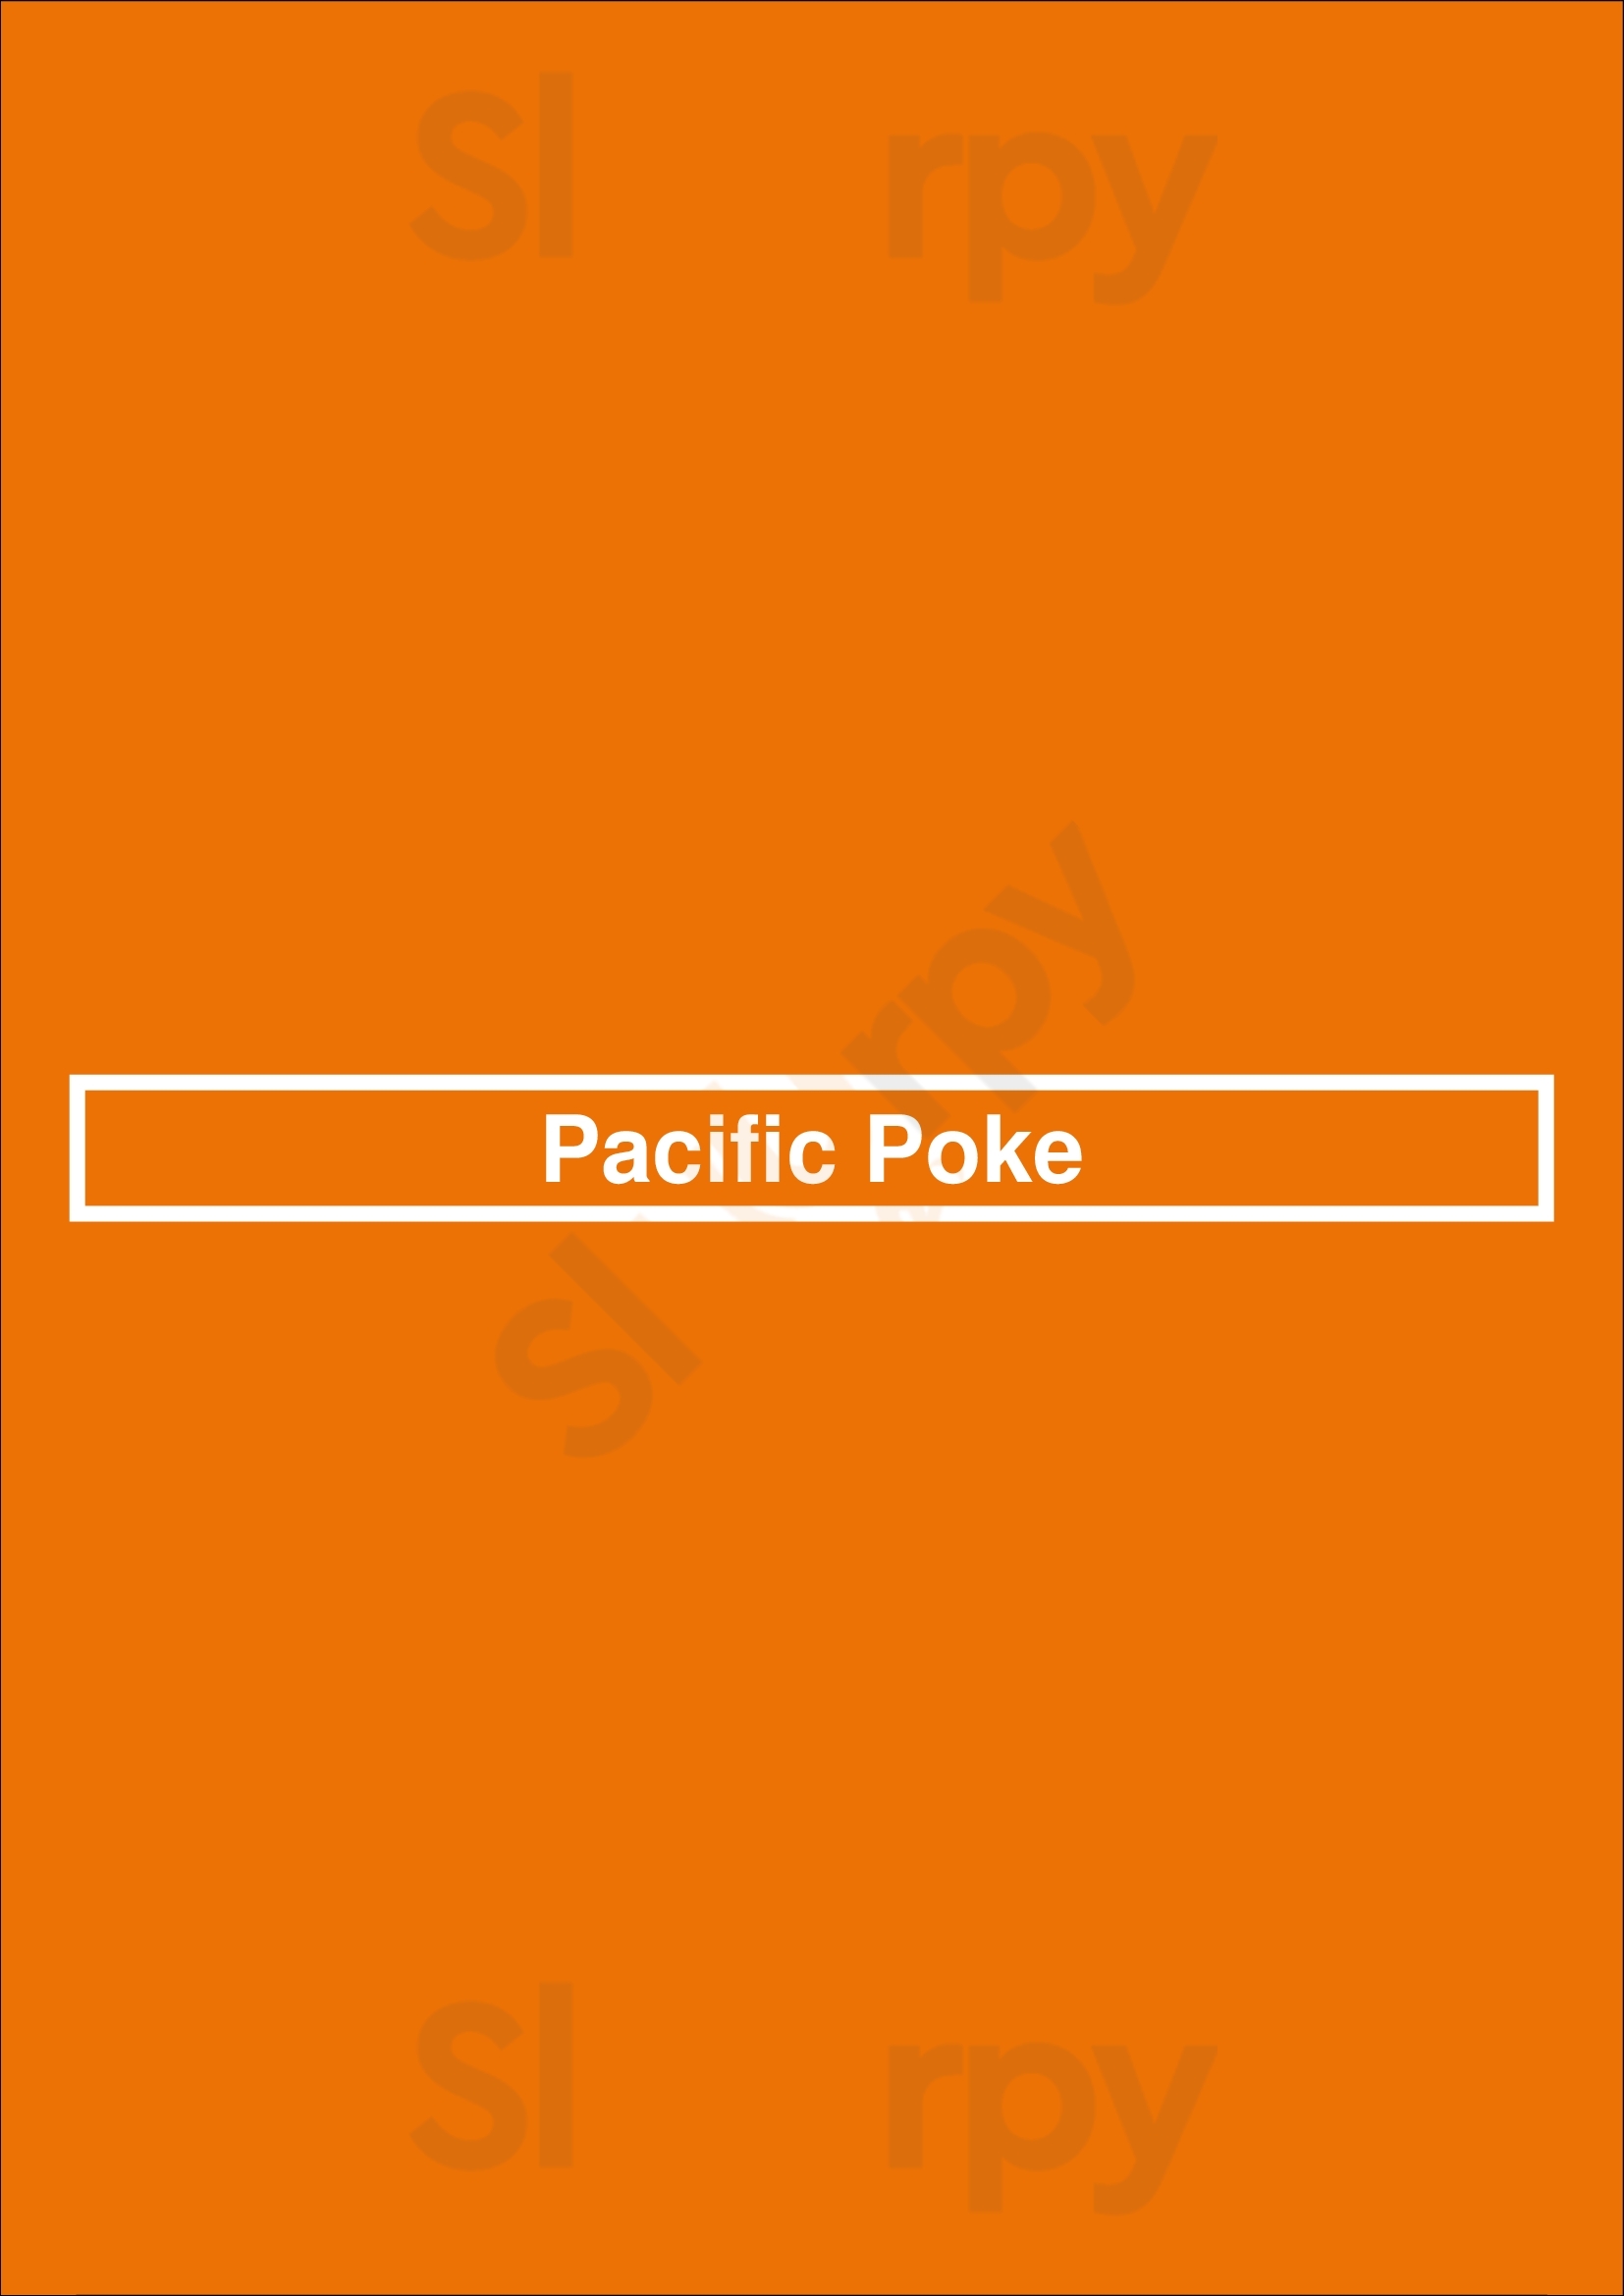 Pacific Poke Calgary Menu - 1